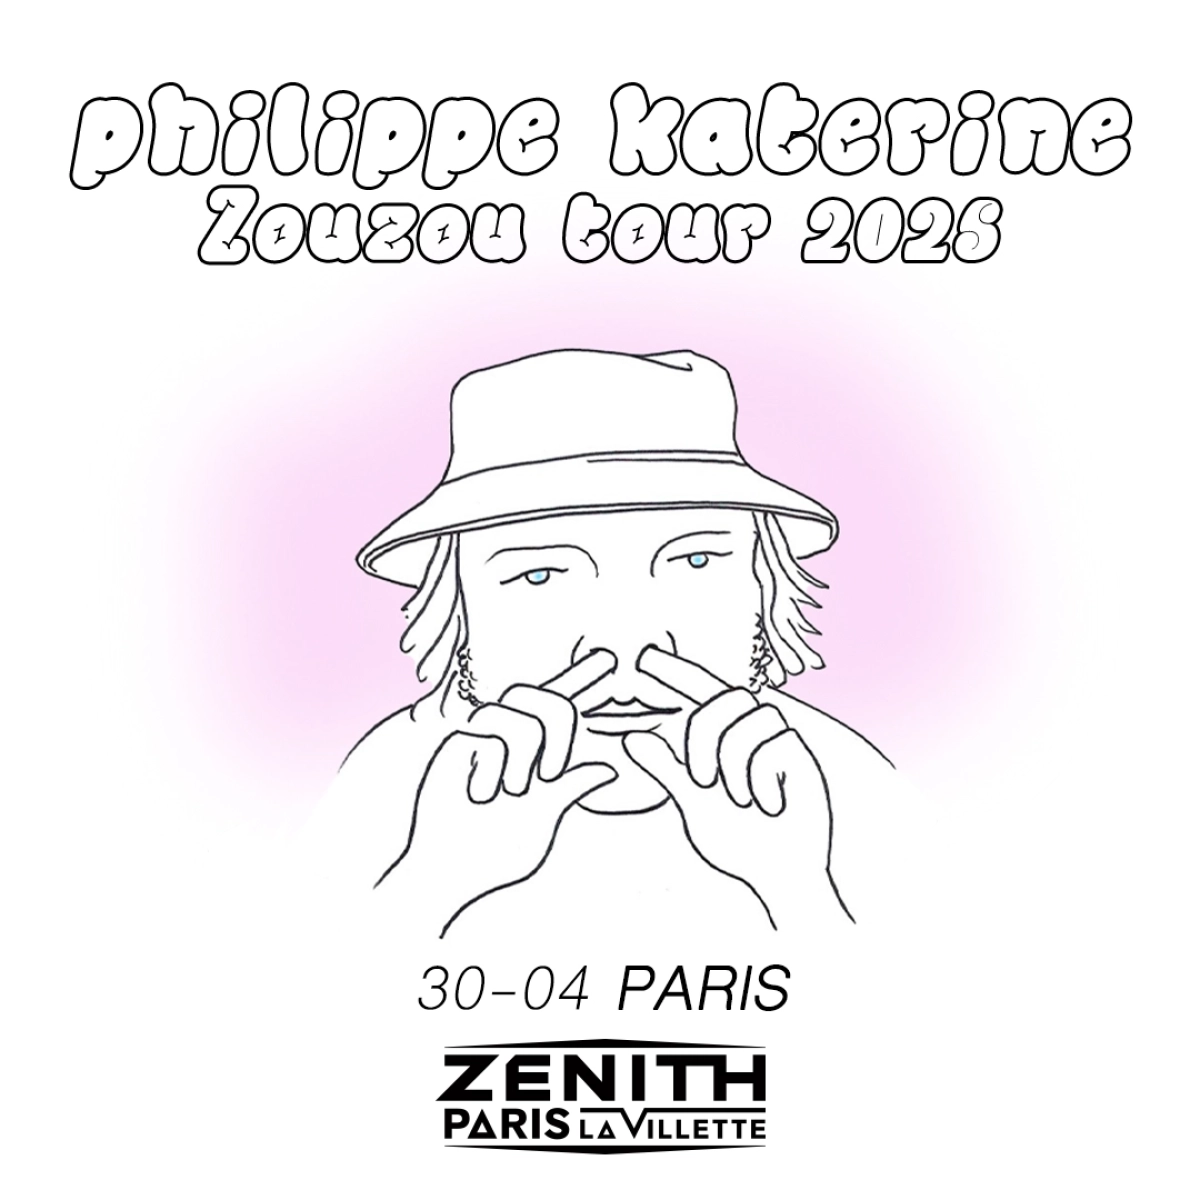 Philippe Katerine en Zenith Paris Tickets